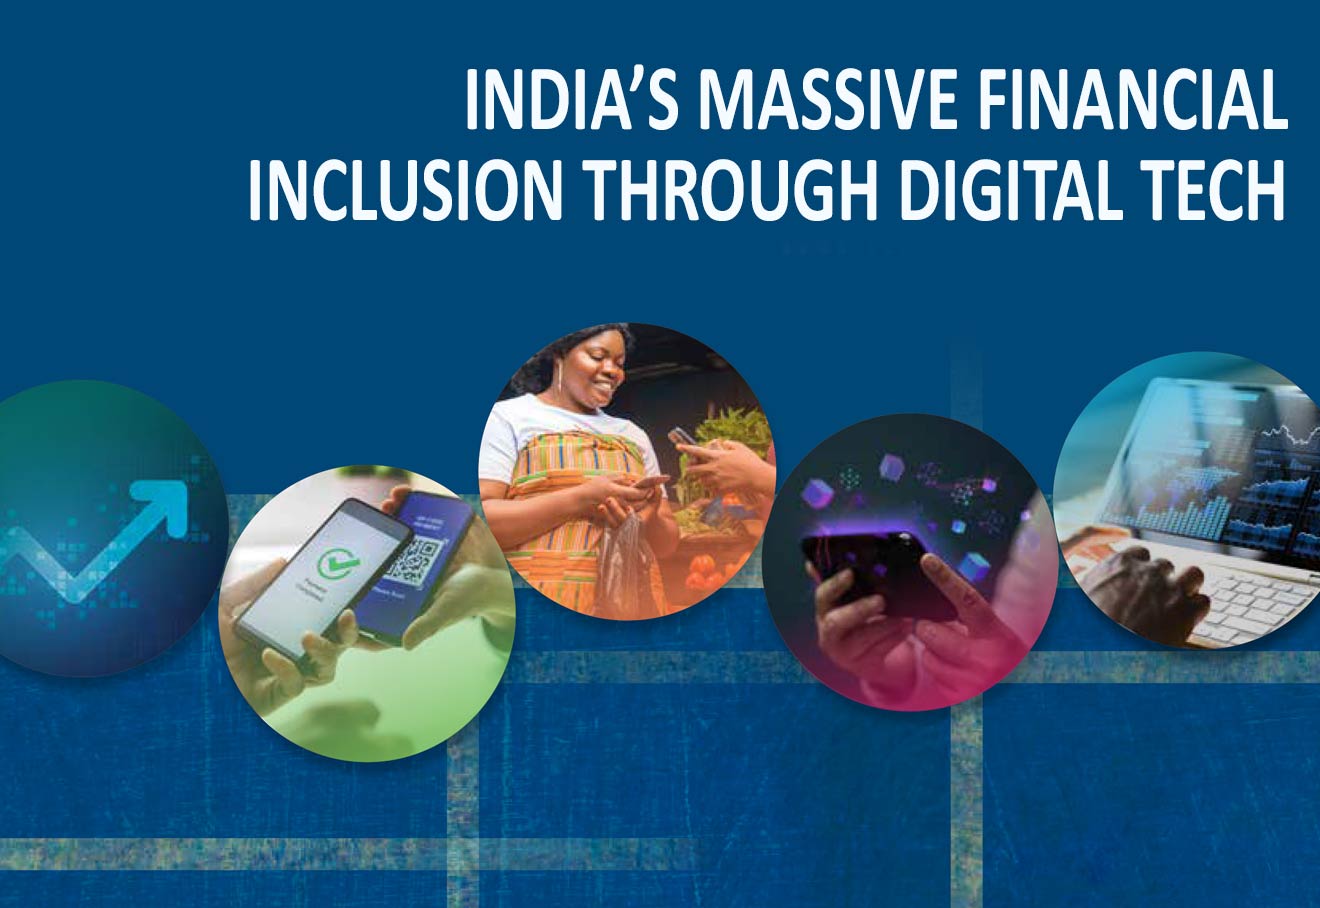 G20: World Bank Lauds India’s Massive Financial Inclusion Through Digital Tech